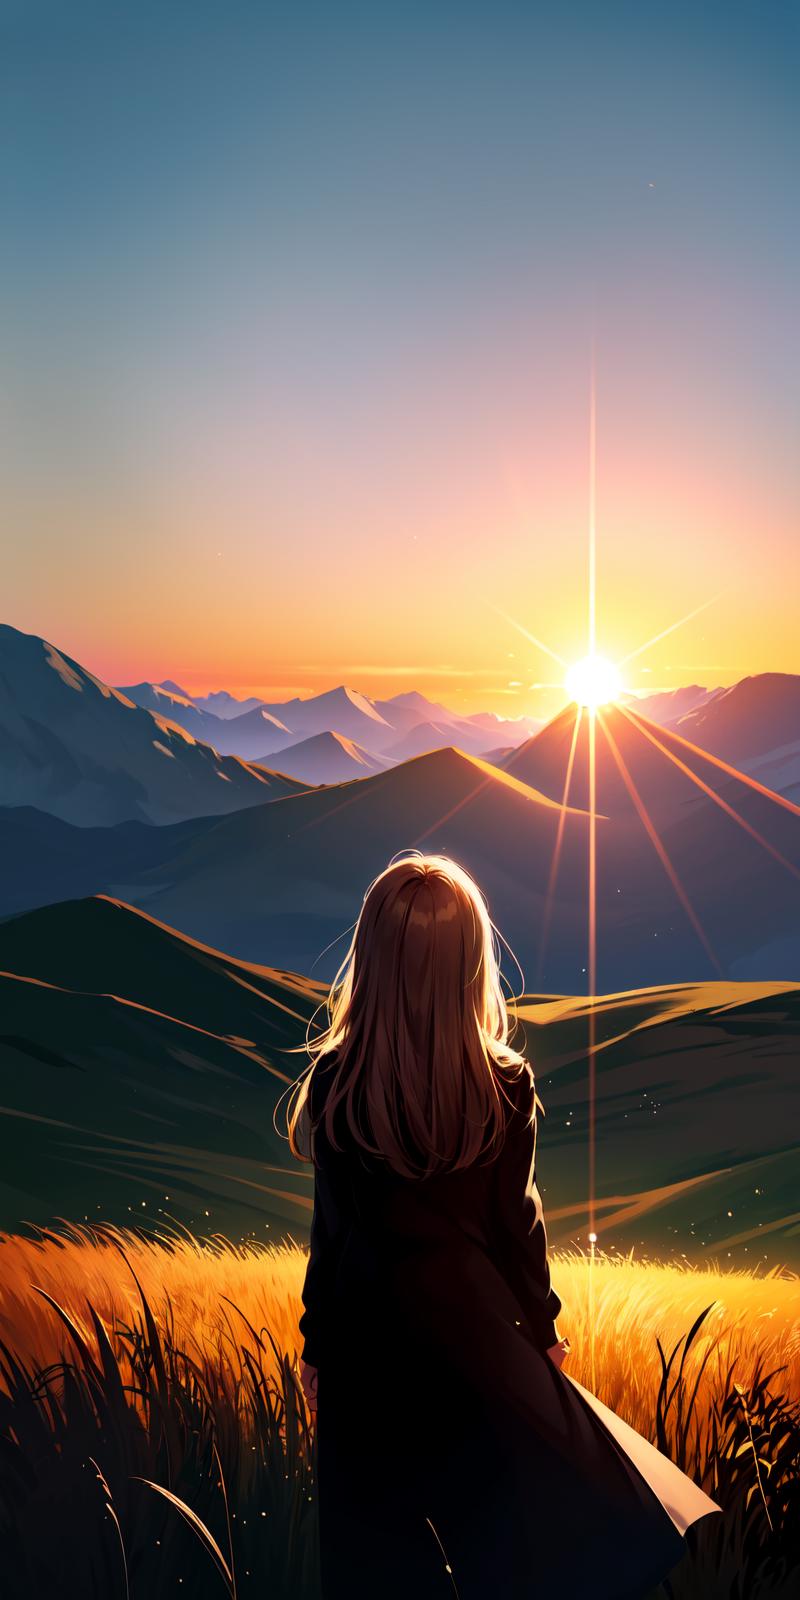 A woman enjoying the sunset on a mountain.